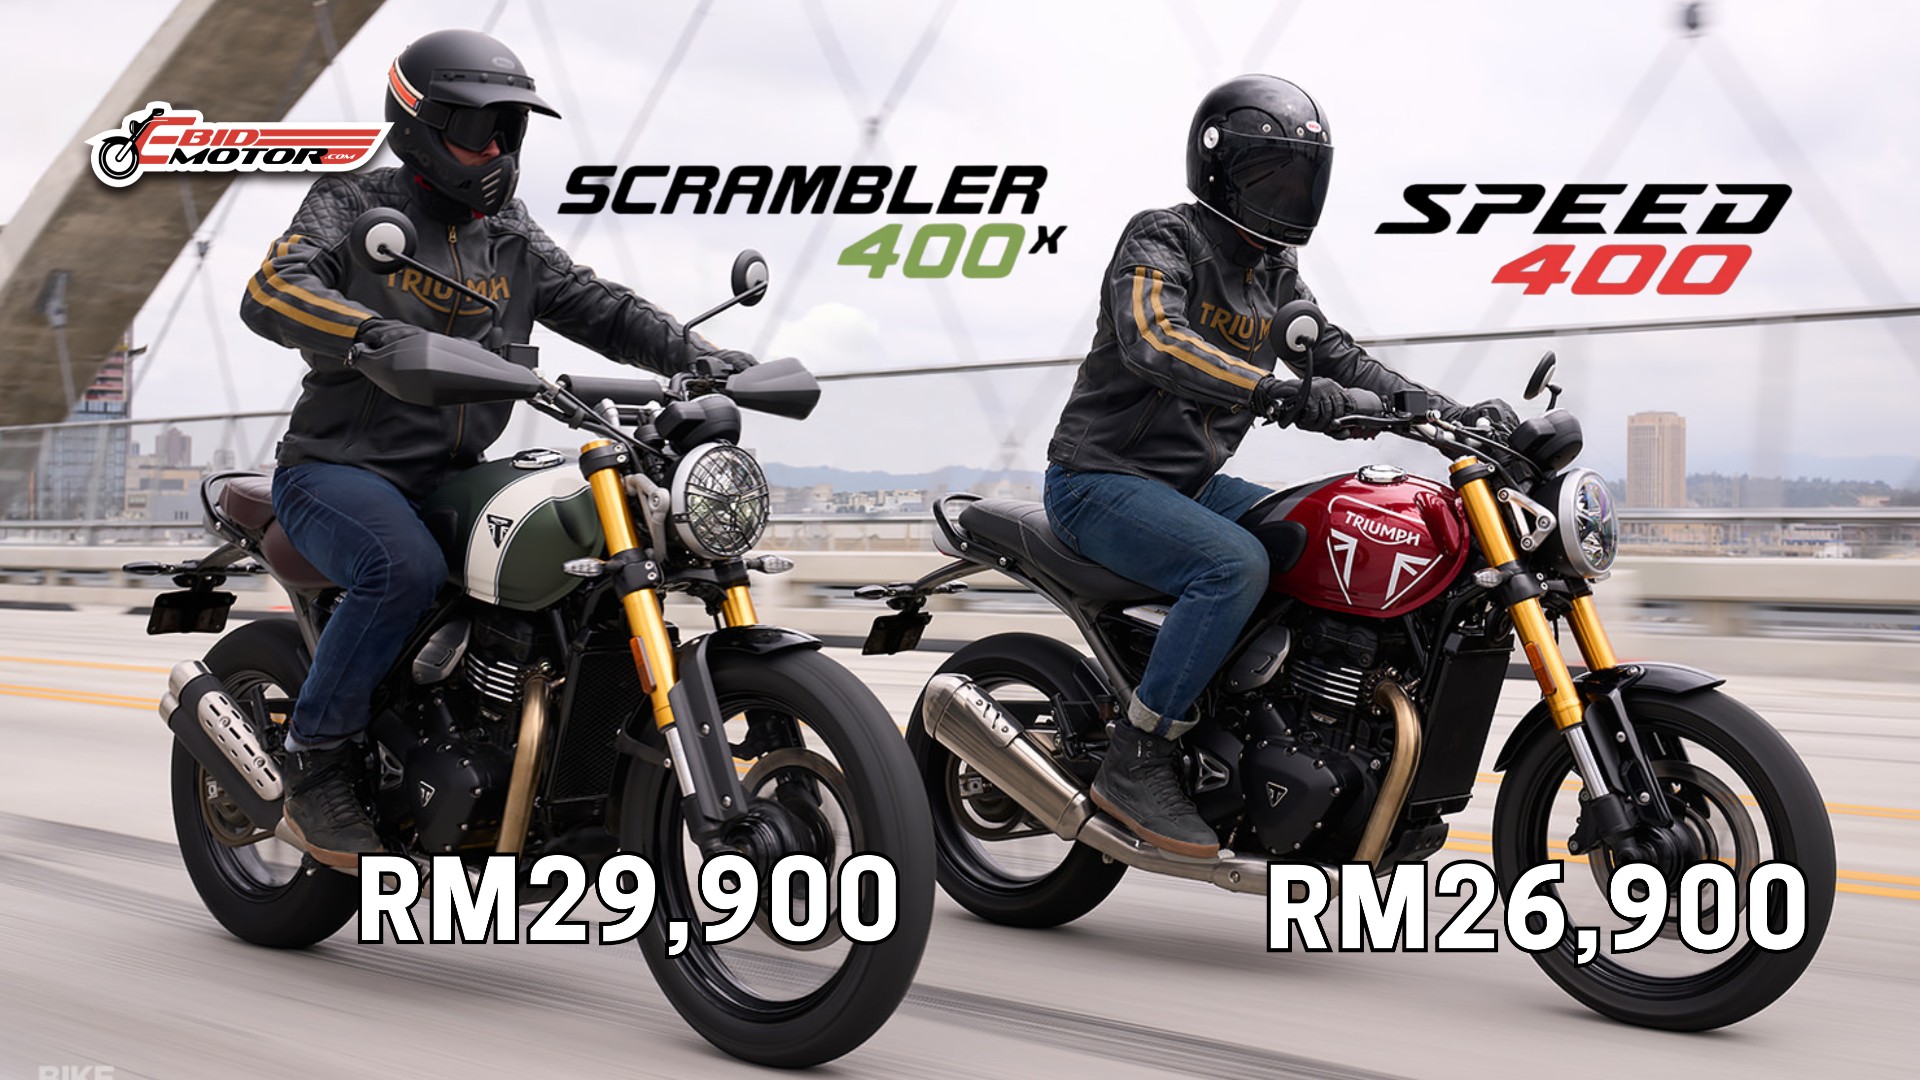 Lesen Ada Duit Takde? Triumph Speed 400 & Scrambler 400 X Dijual Dari RM26,900!